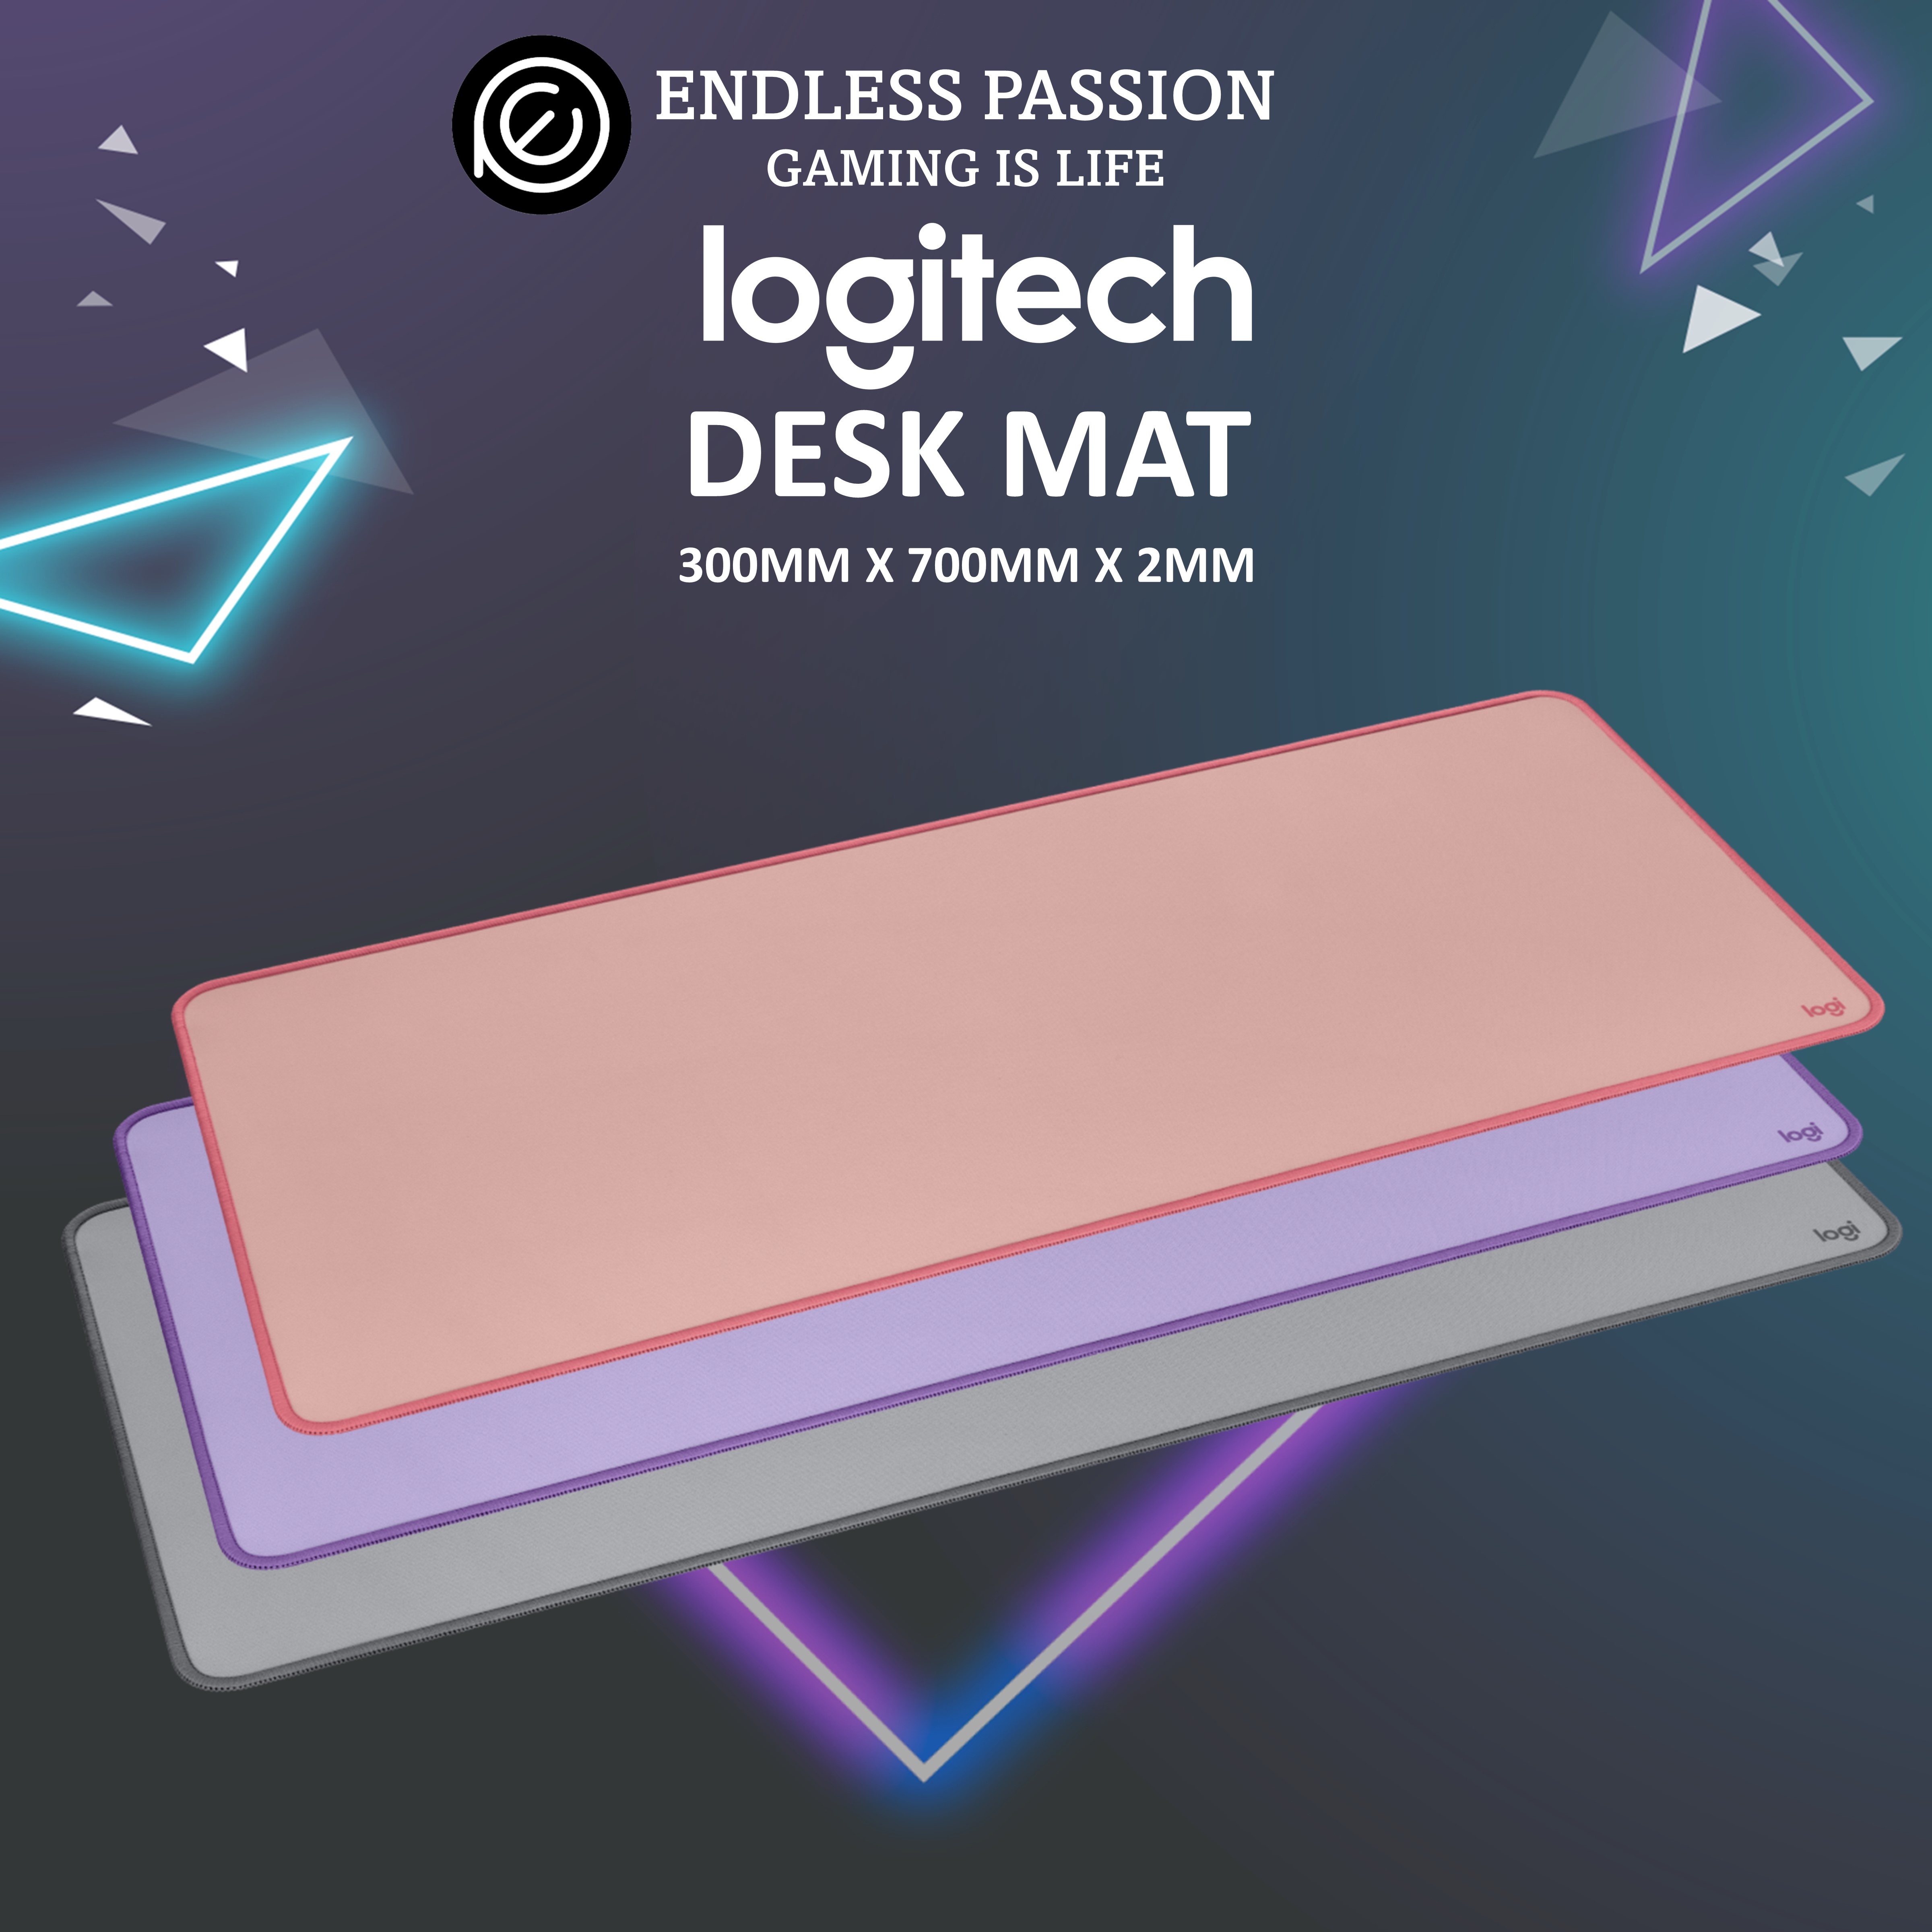 Logitech Desk Mat - Studio Series, Multifunctional Large Desk Pad, Extended  Mouse Mat, Office Desk Protector with Anti-Slip Base, Spill-Resistant  Durable Design